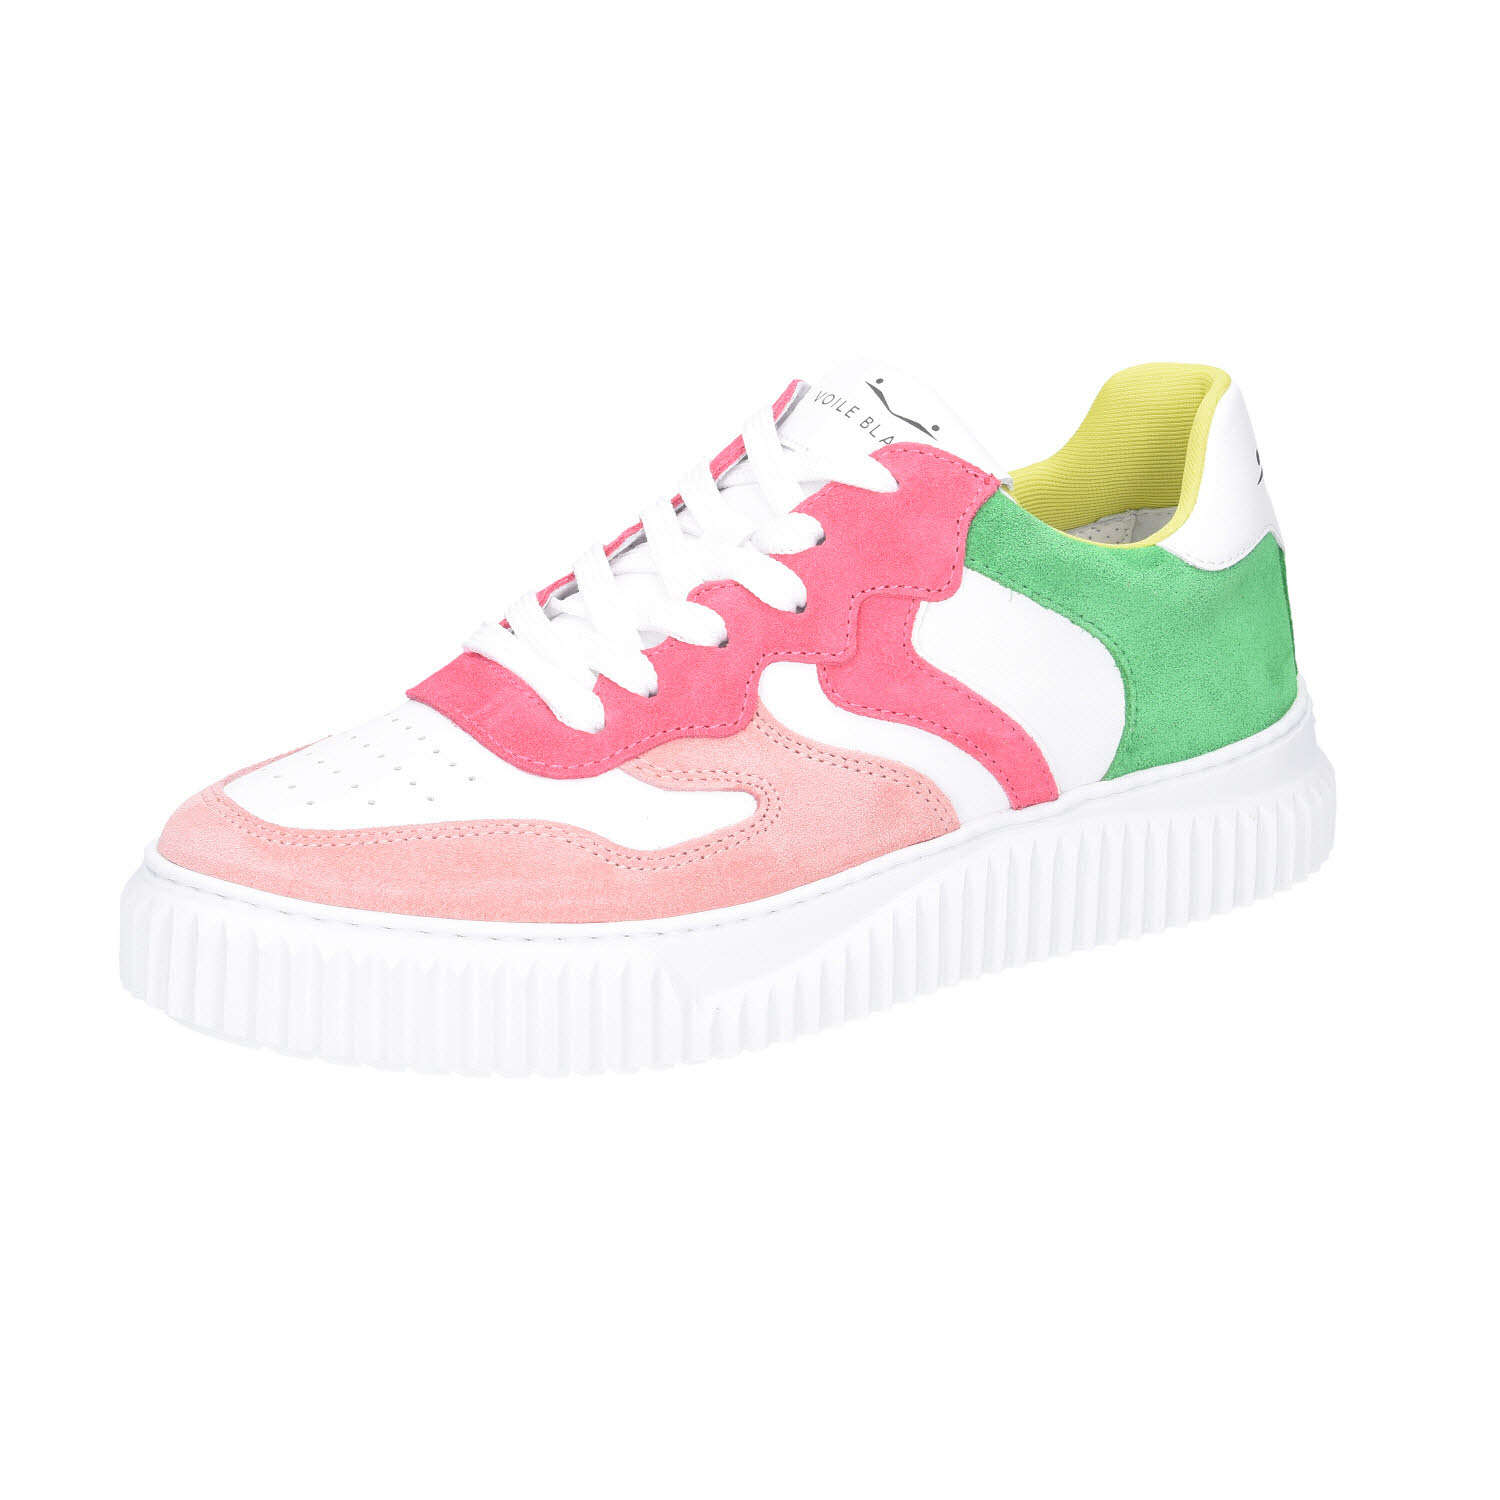 Voile Blanche Laura Sneaker Suede Pink/Fuchsia/Green mehrfarbig